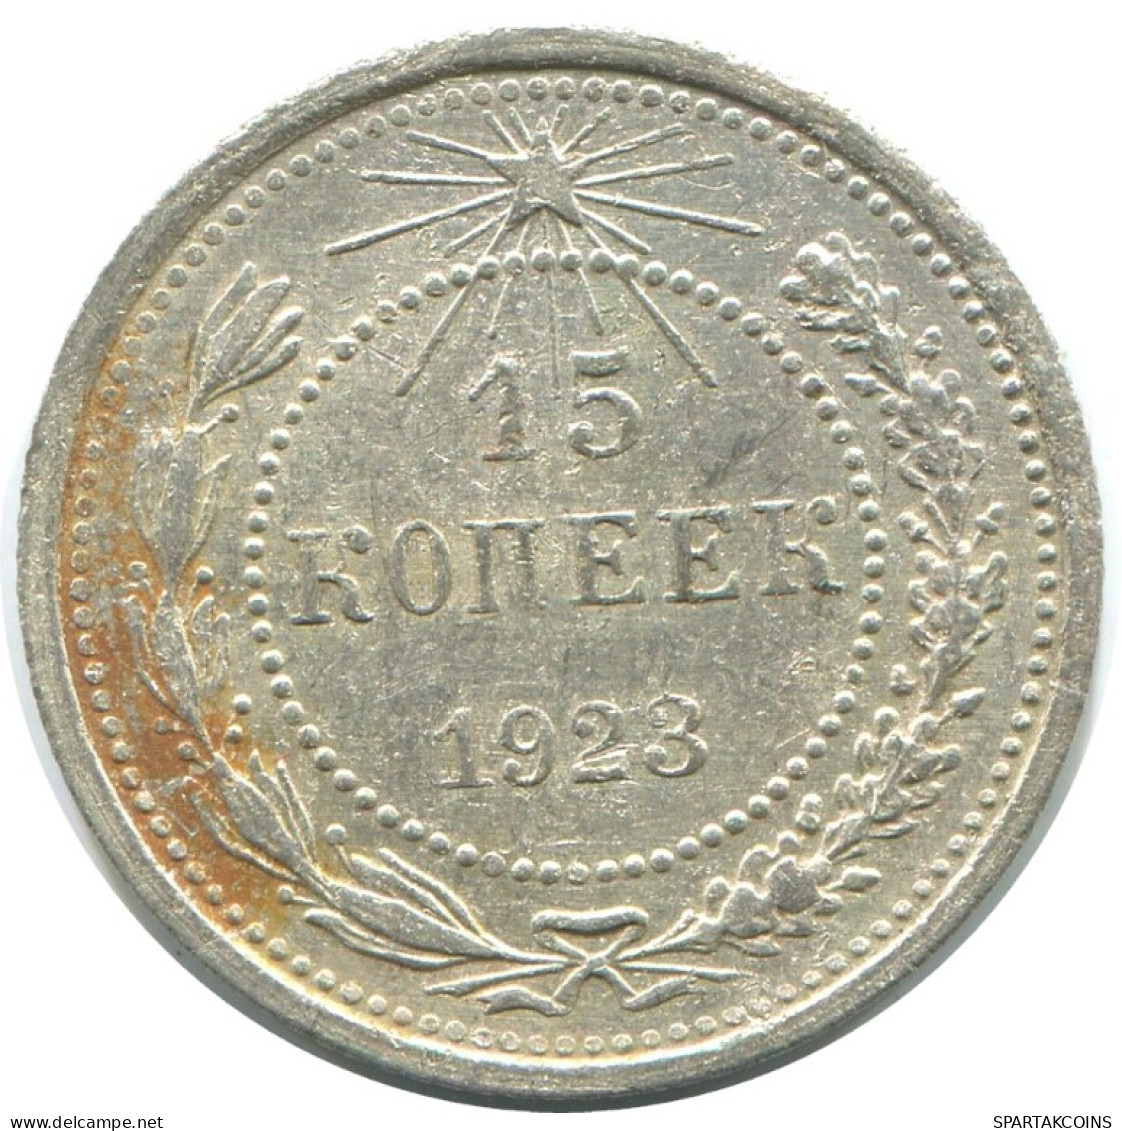 15 KOPEKS 1923 RUSSIA RSFSR SILVER Coin HIGH GRADE #AF129.4.U.A - Russia